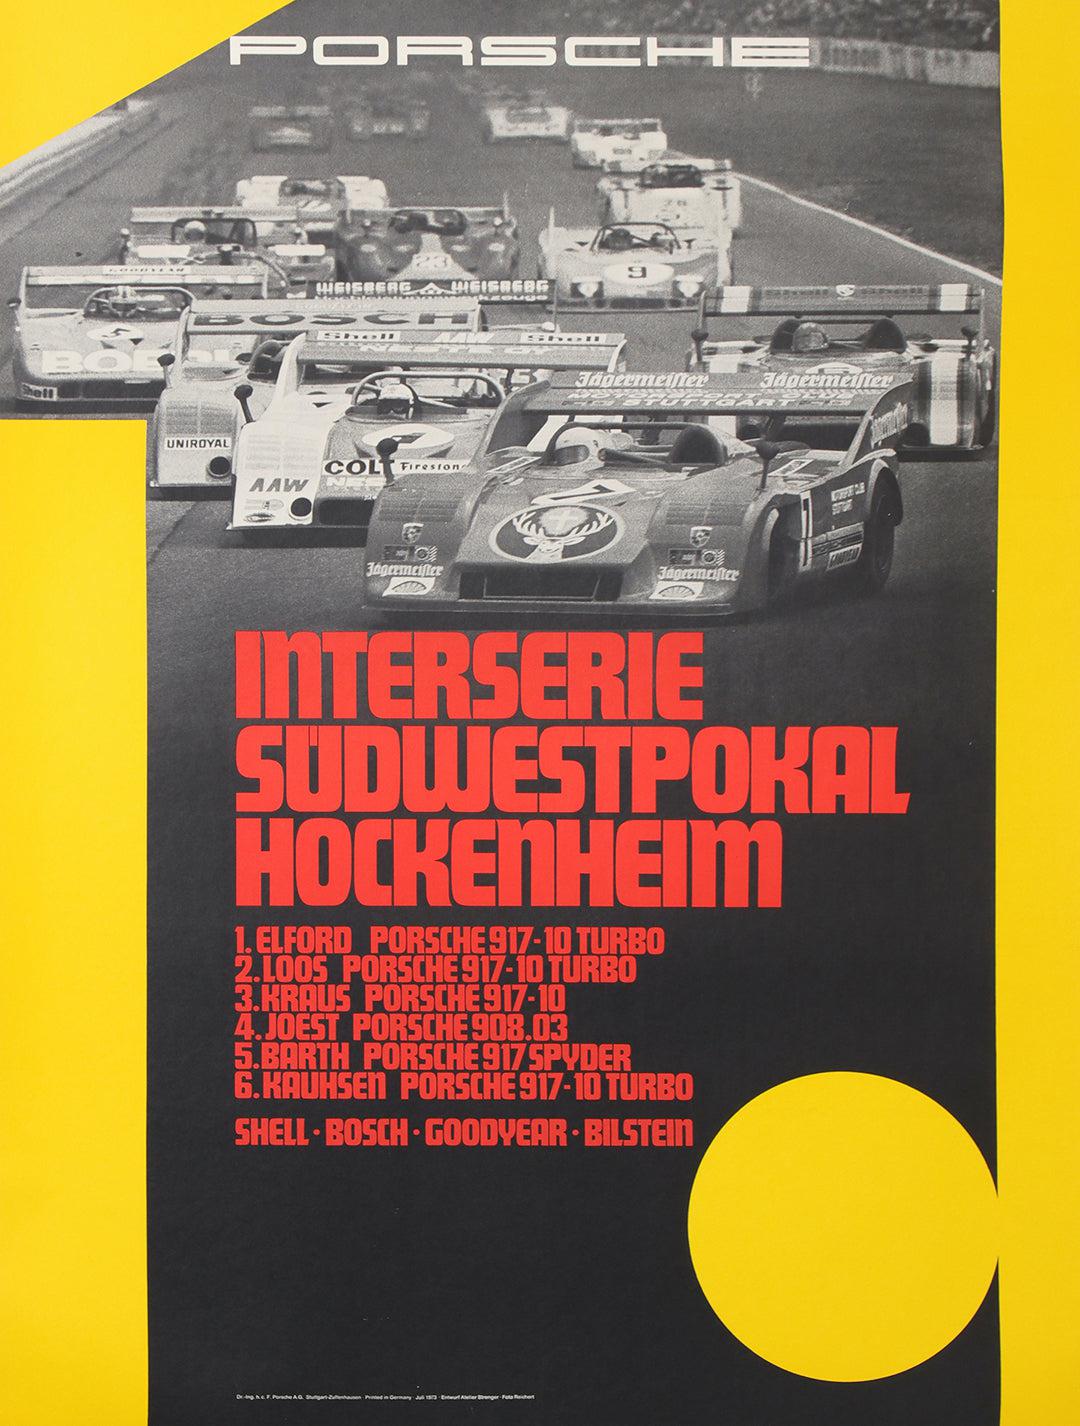 Original Vintage Porsche Car Race Poster 1973 Interserie Sudwestpokal Hockenheim